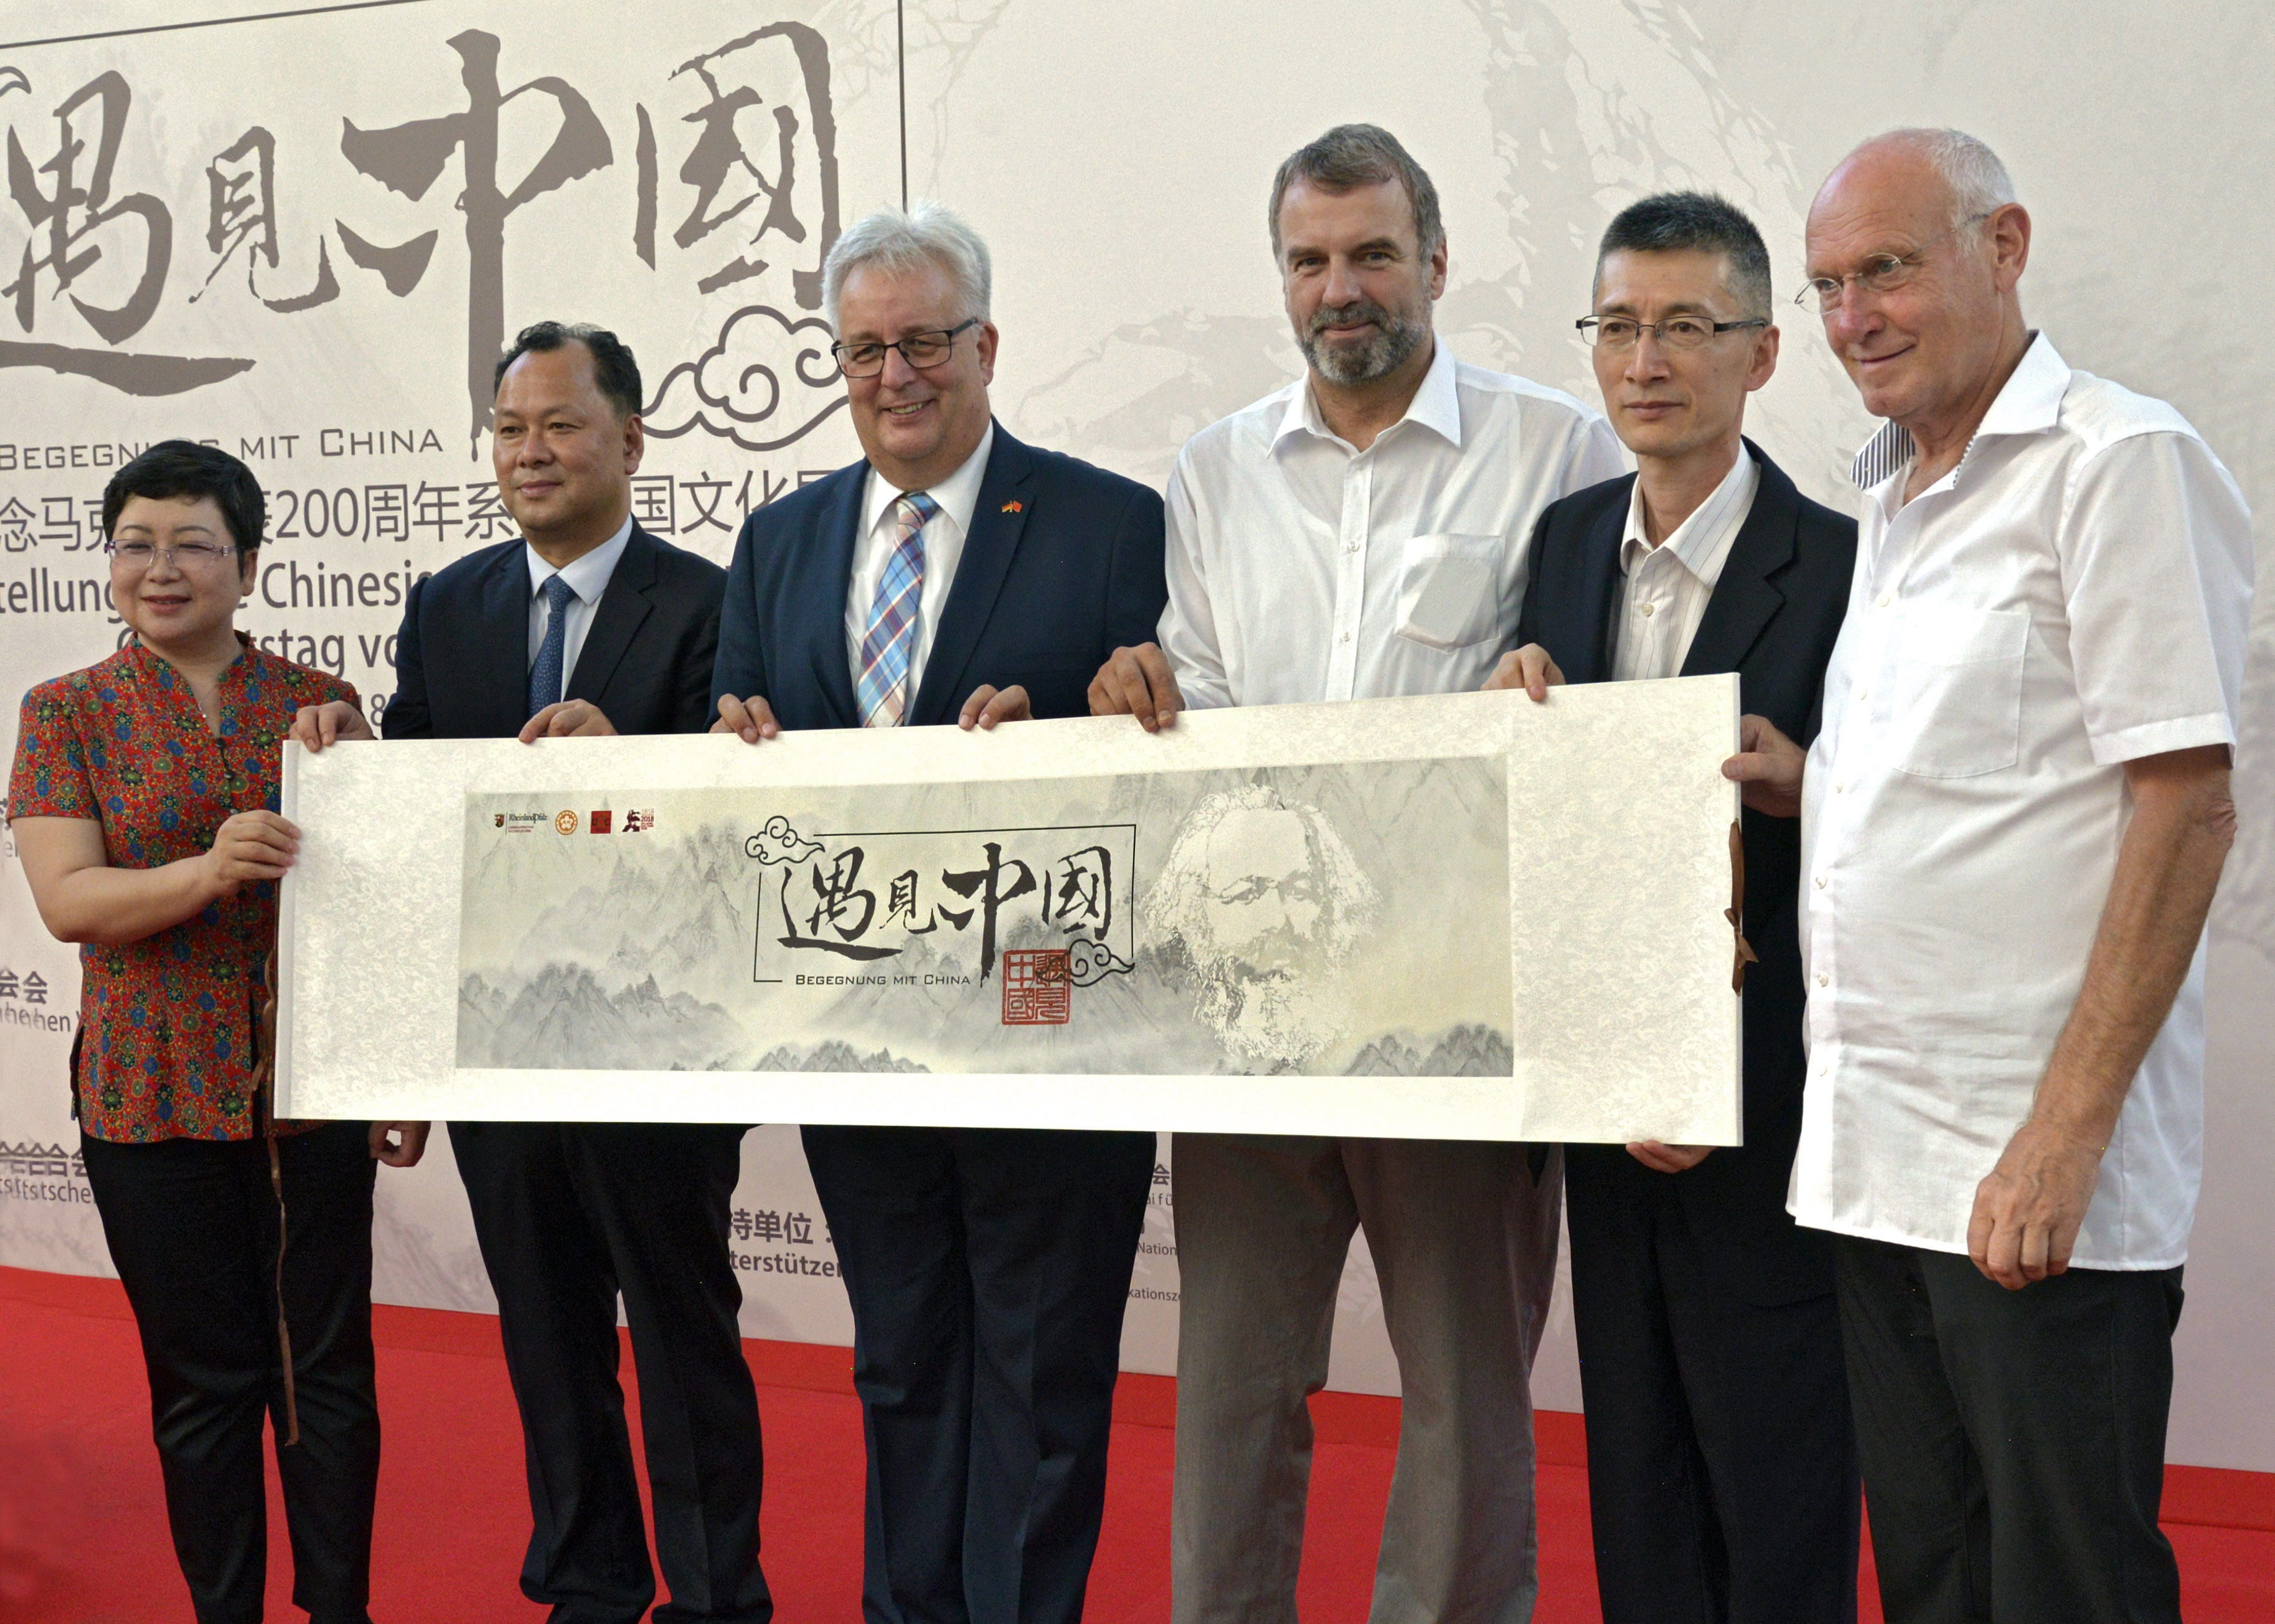 Foto zeigt bei der Eröffnung v.l.n.r. JIA Ling (CPAFFC), CHEN Guangjun (Baoshan), Beig. A. Ludwig, Dr. Marcus Reuter (GDKE), YAN Susheng (Chengdu) und K. Karst (ADCG).